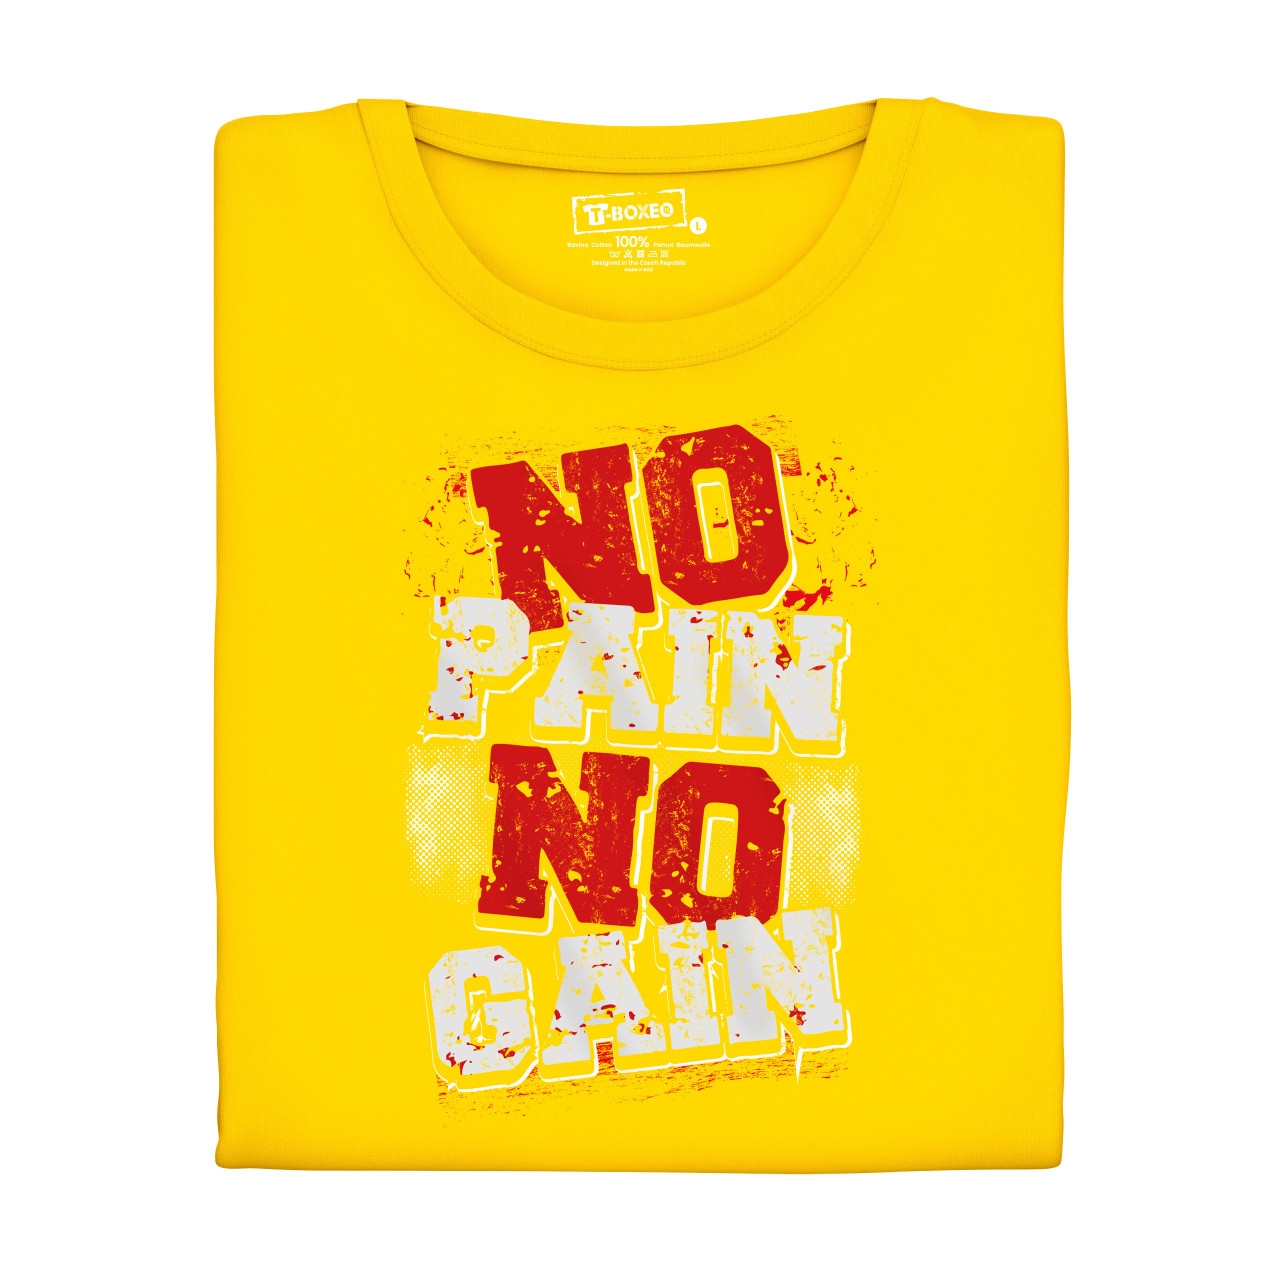 Pánské tričko s potiskem “No Pain, No Gain”